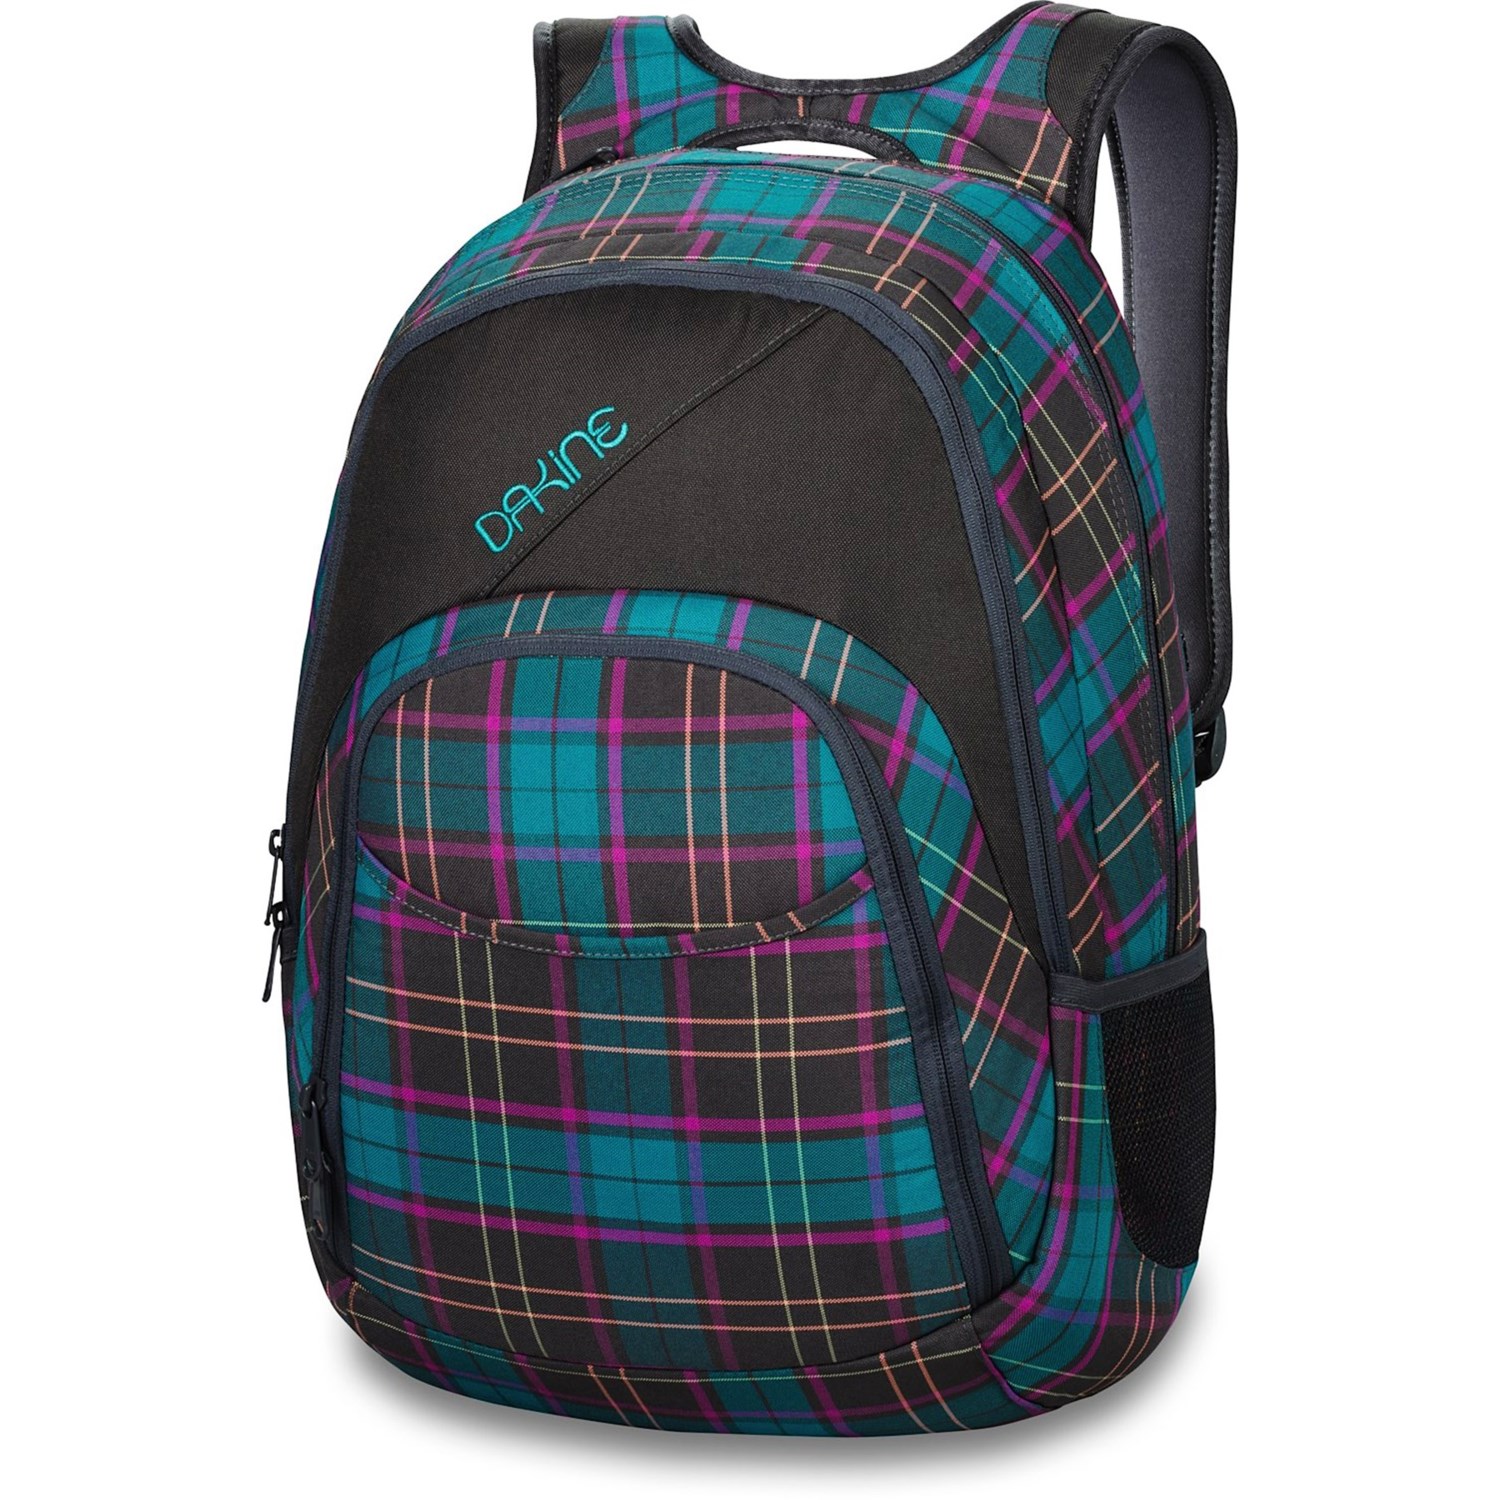 DaKine Eve Backpack - 28L - Save 33%